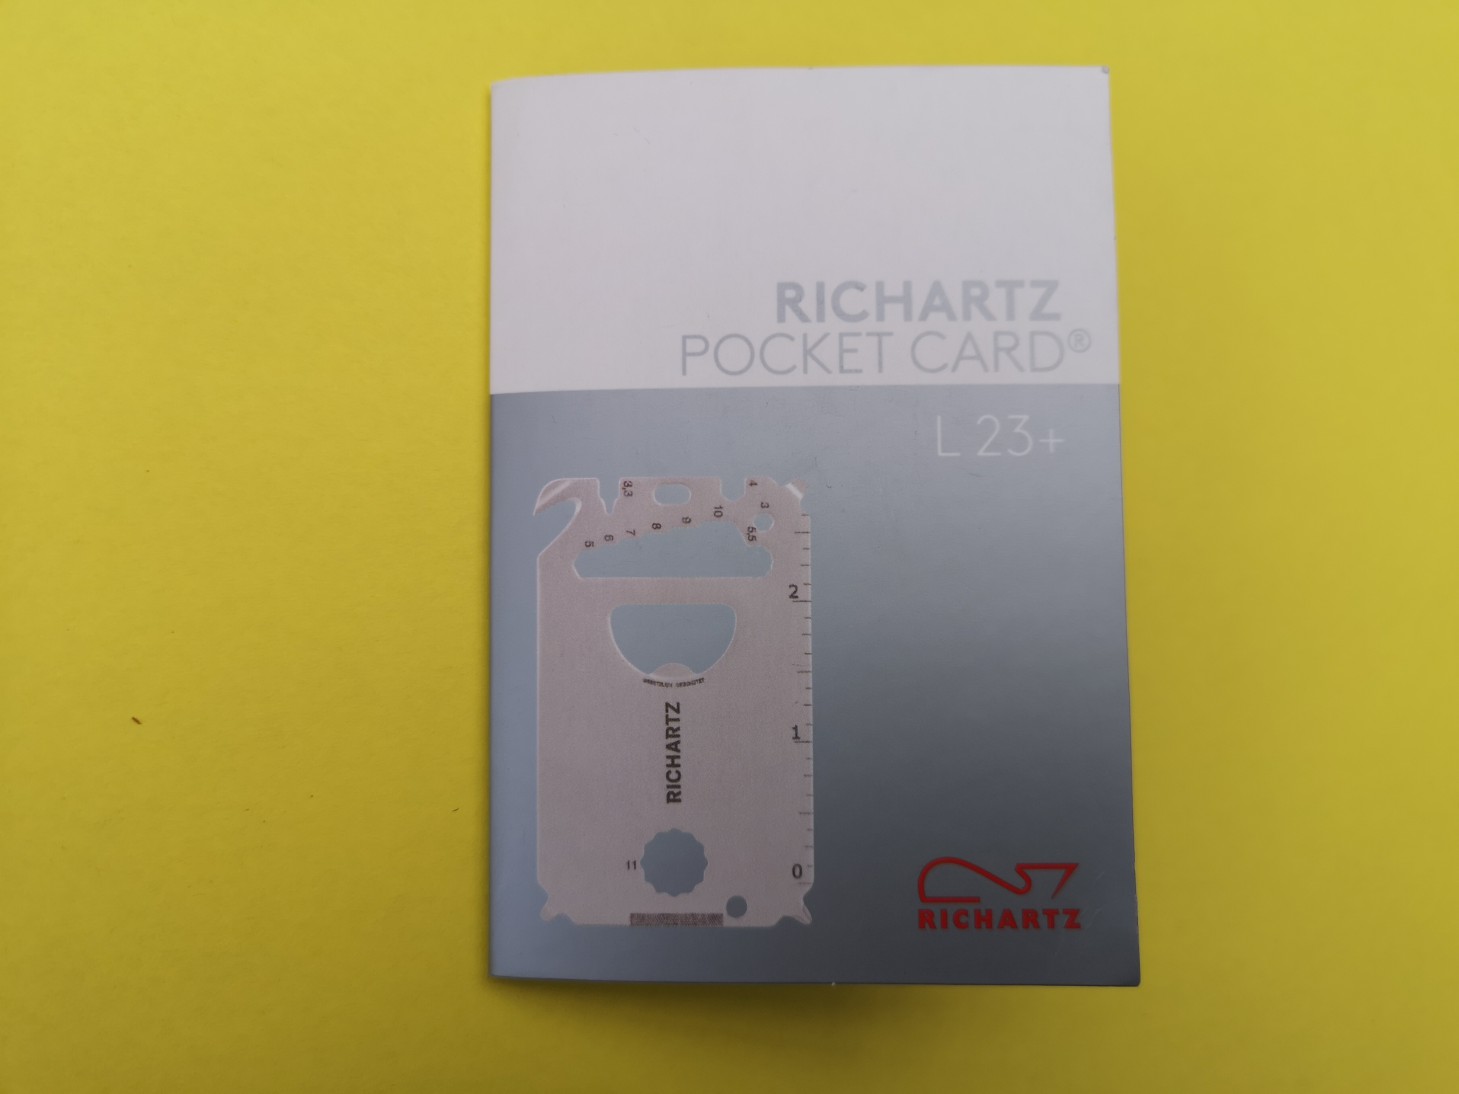 Richartz-POCKET-CARD-L23-1.jpg